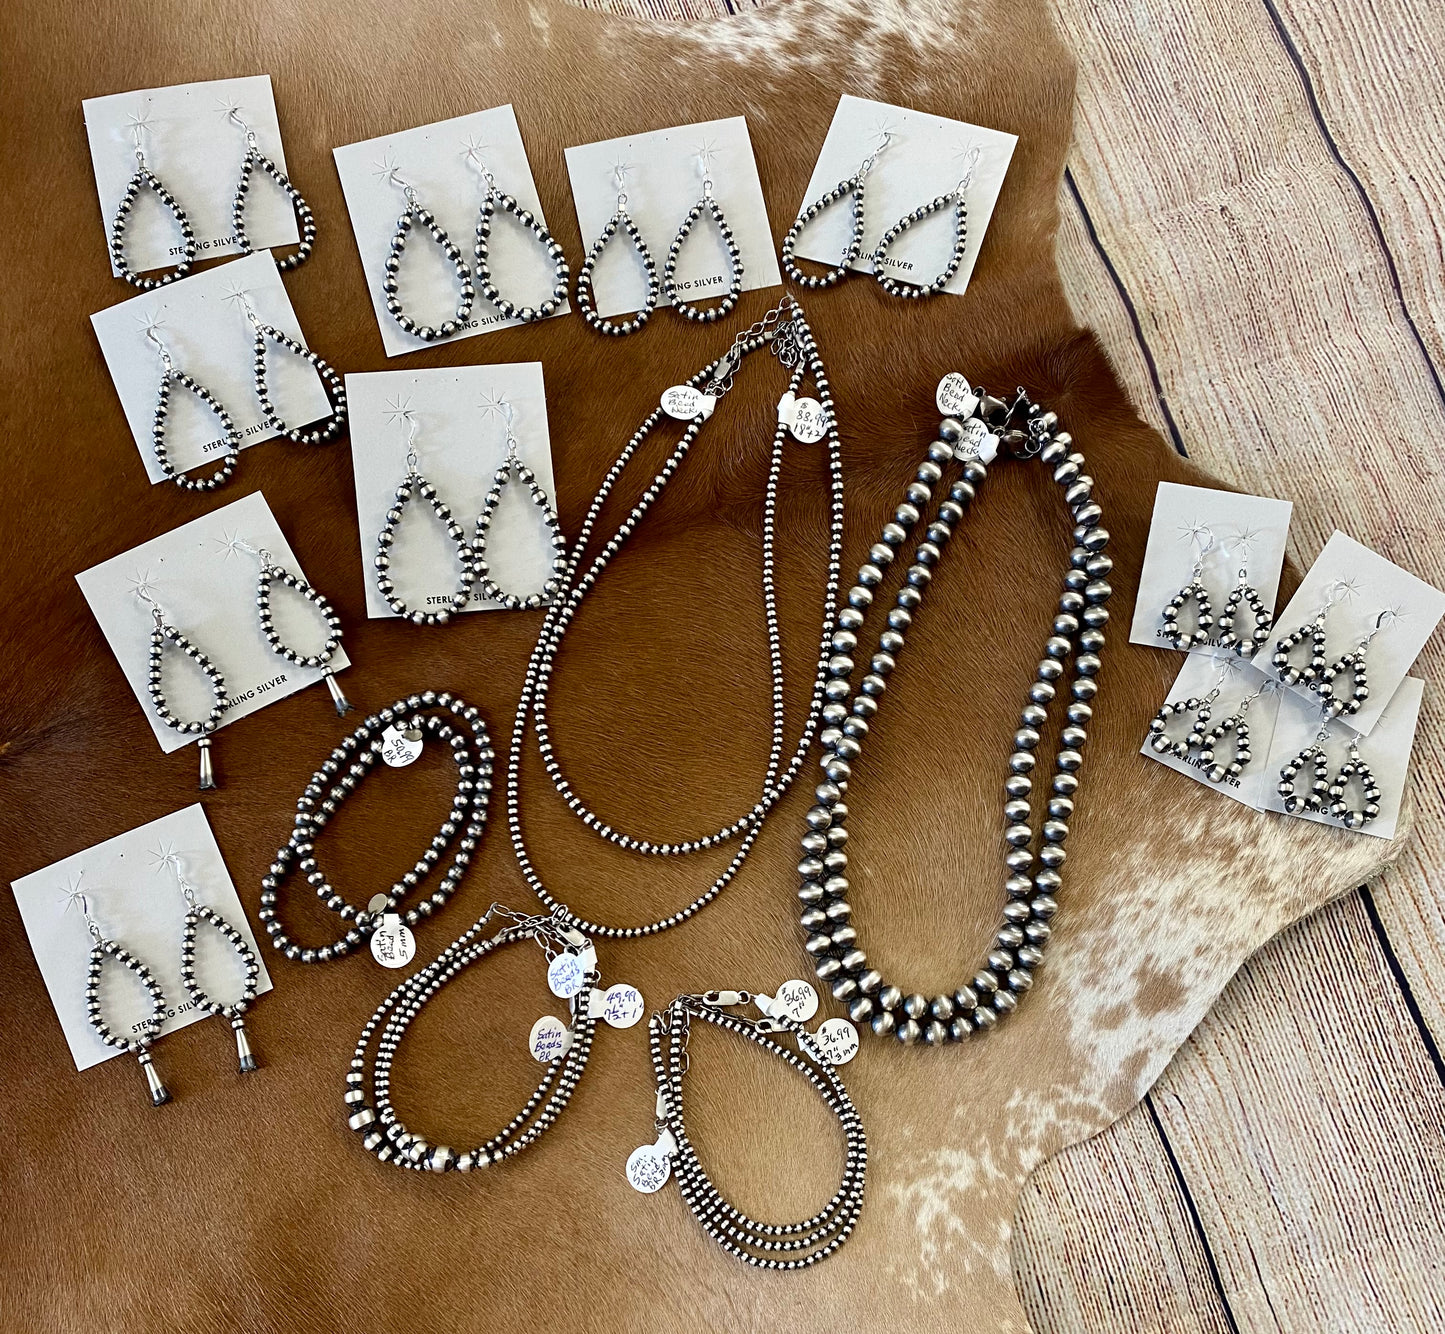 The 2” Length Navajo Pearl Earrings